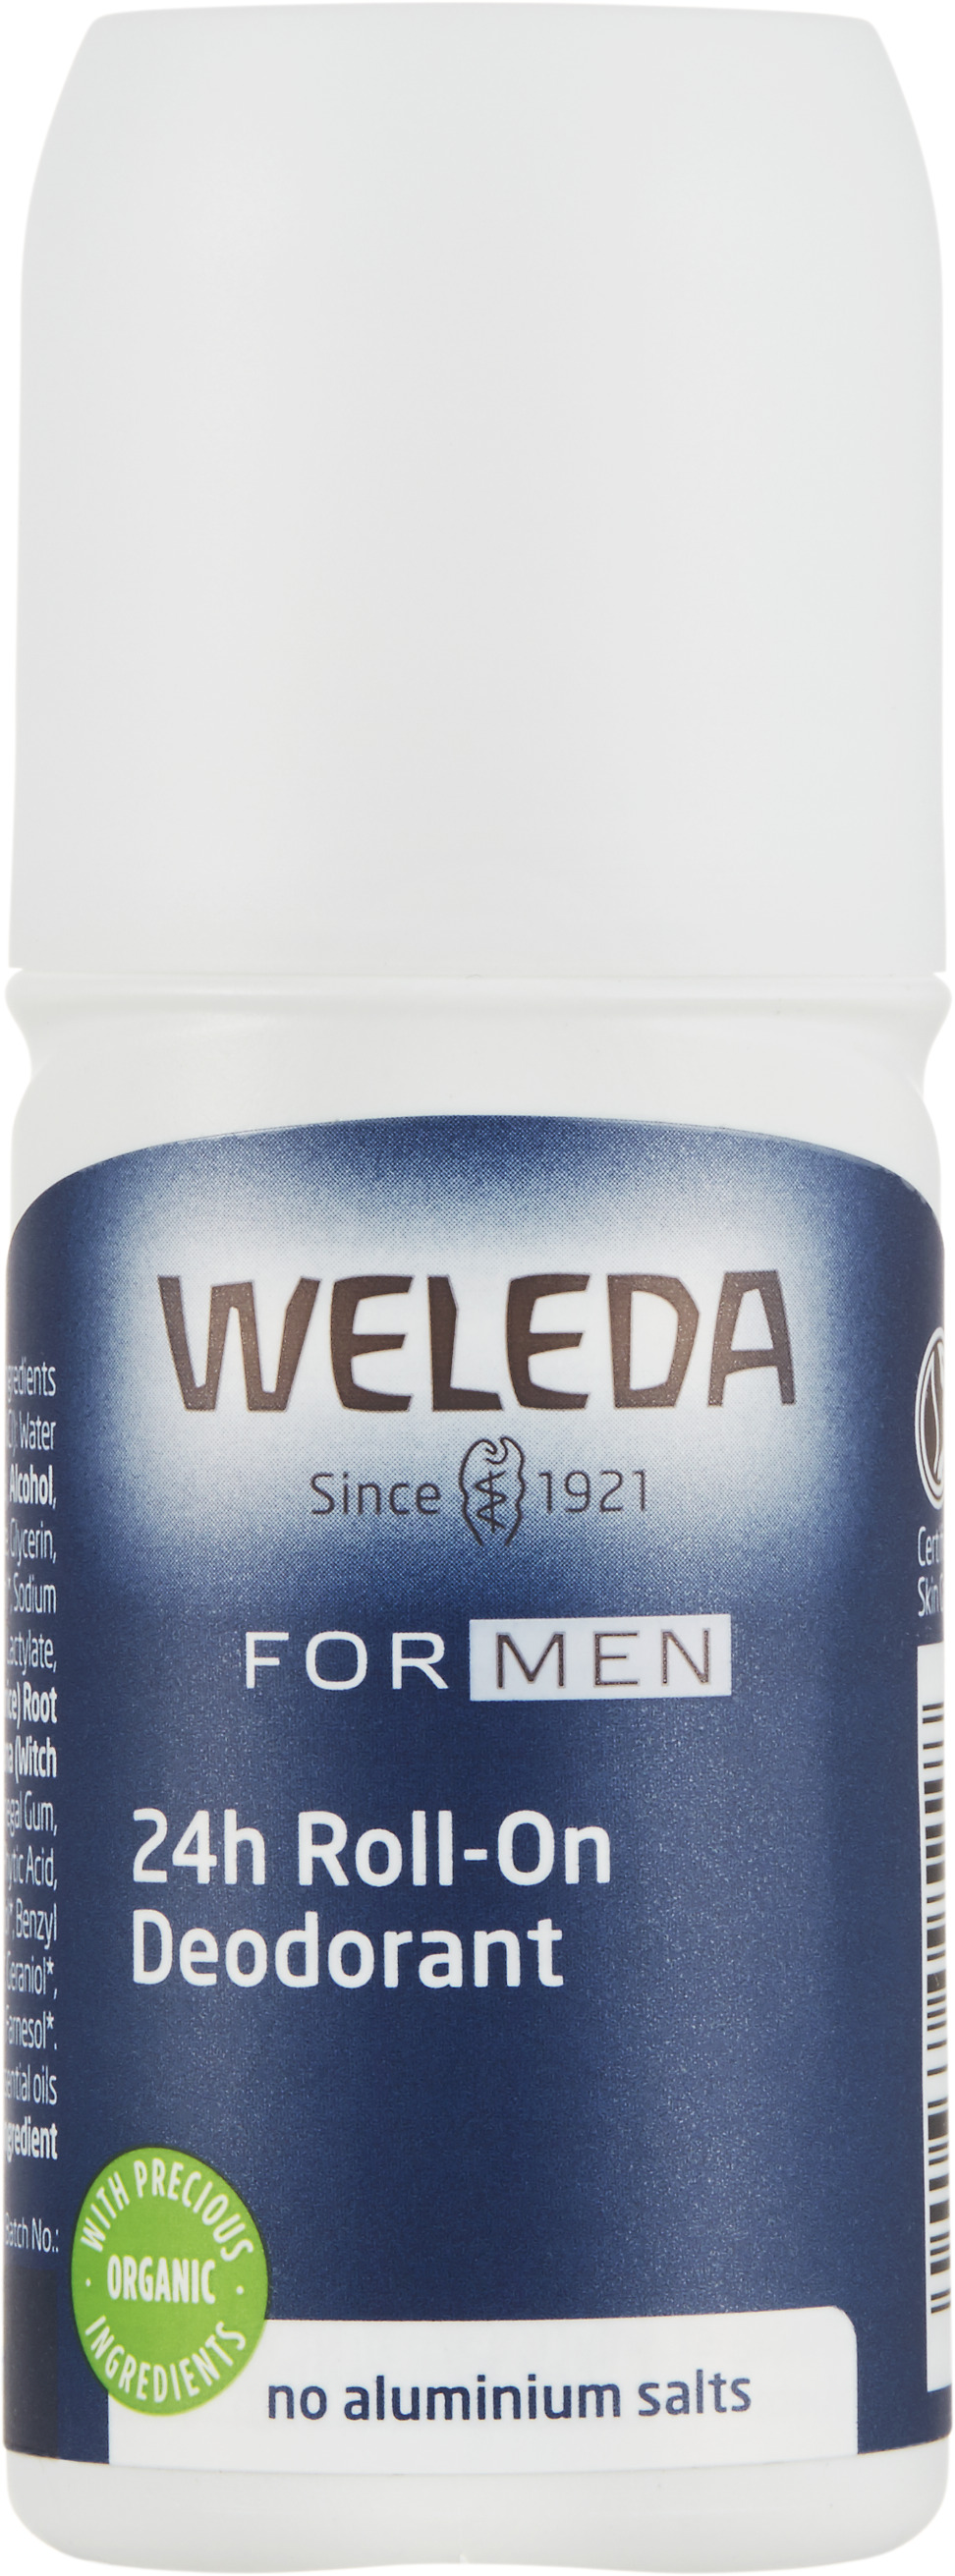 Weleda Men 24h Roll-On Deodorant 50.0 ml